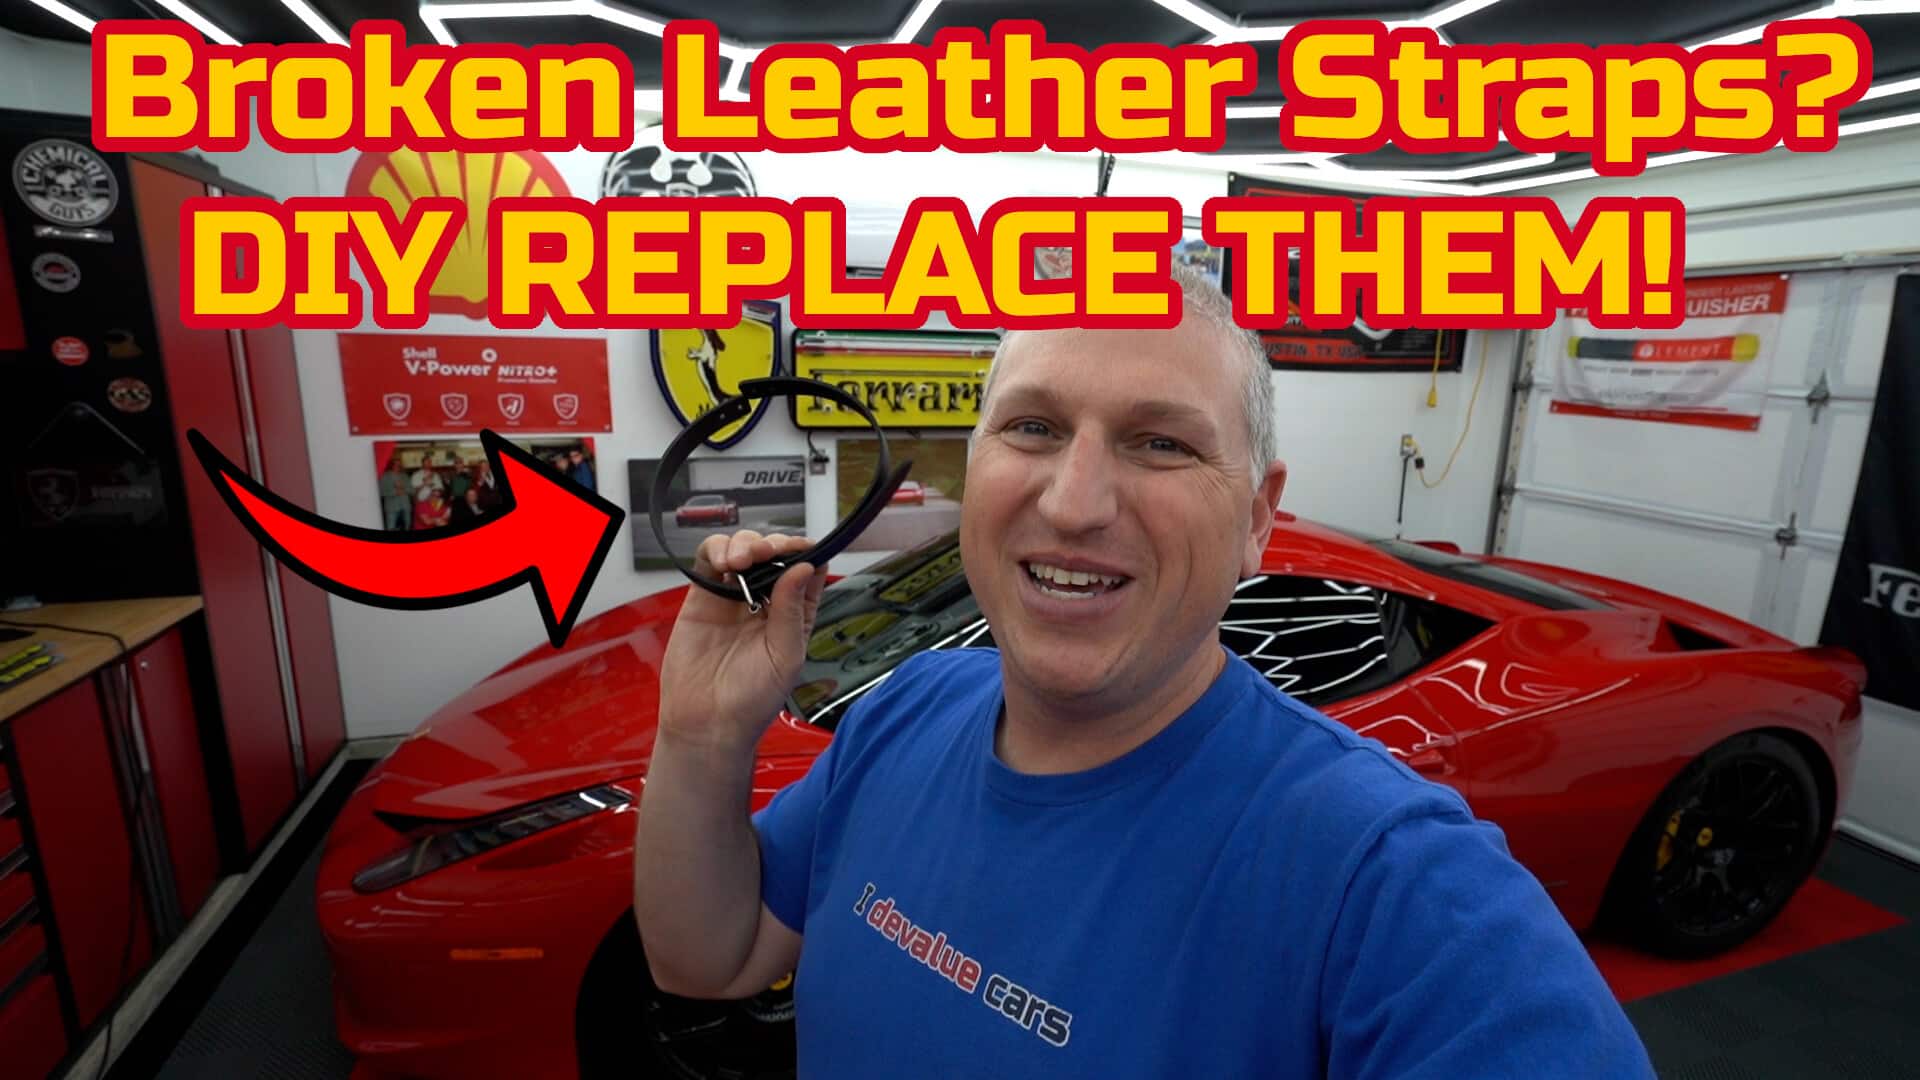 Ferrari 458 BROKEN Leather Strap DIY Replacement